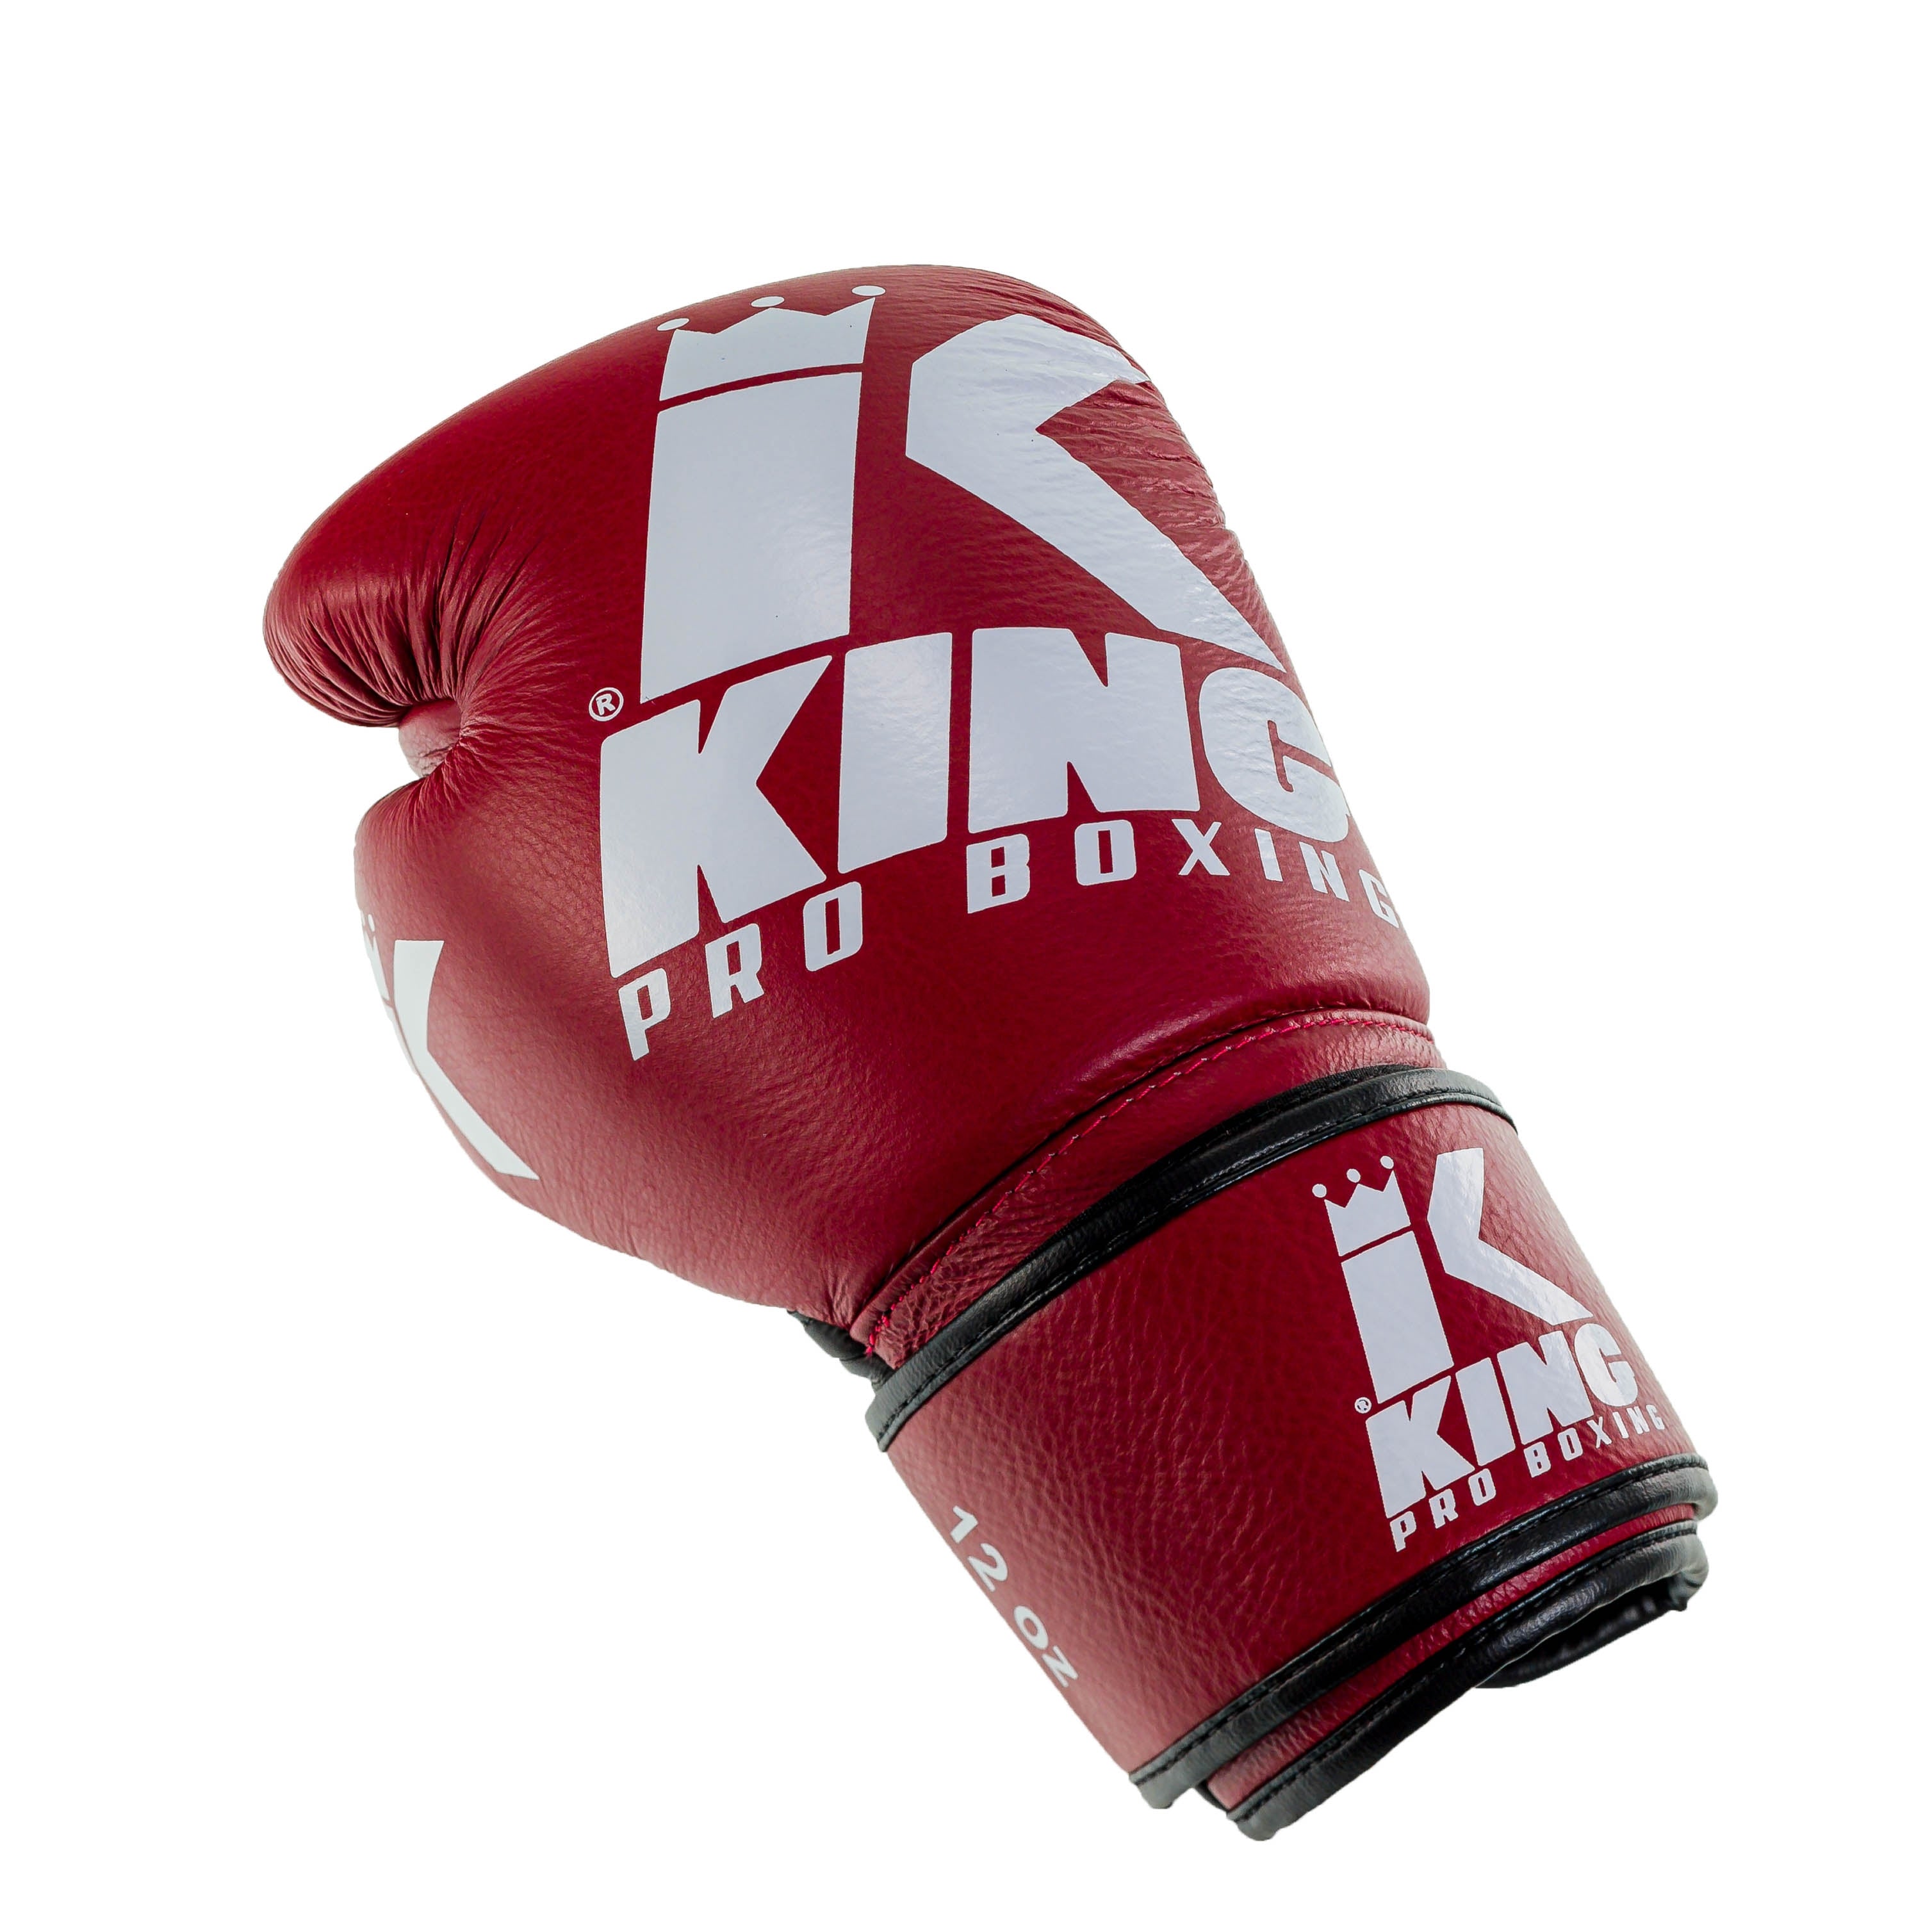 King PRO boxing boxing gloves - BG PLATINUM 4